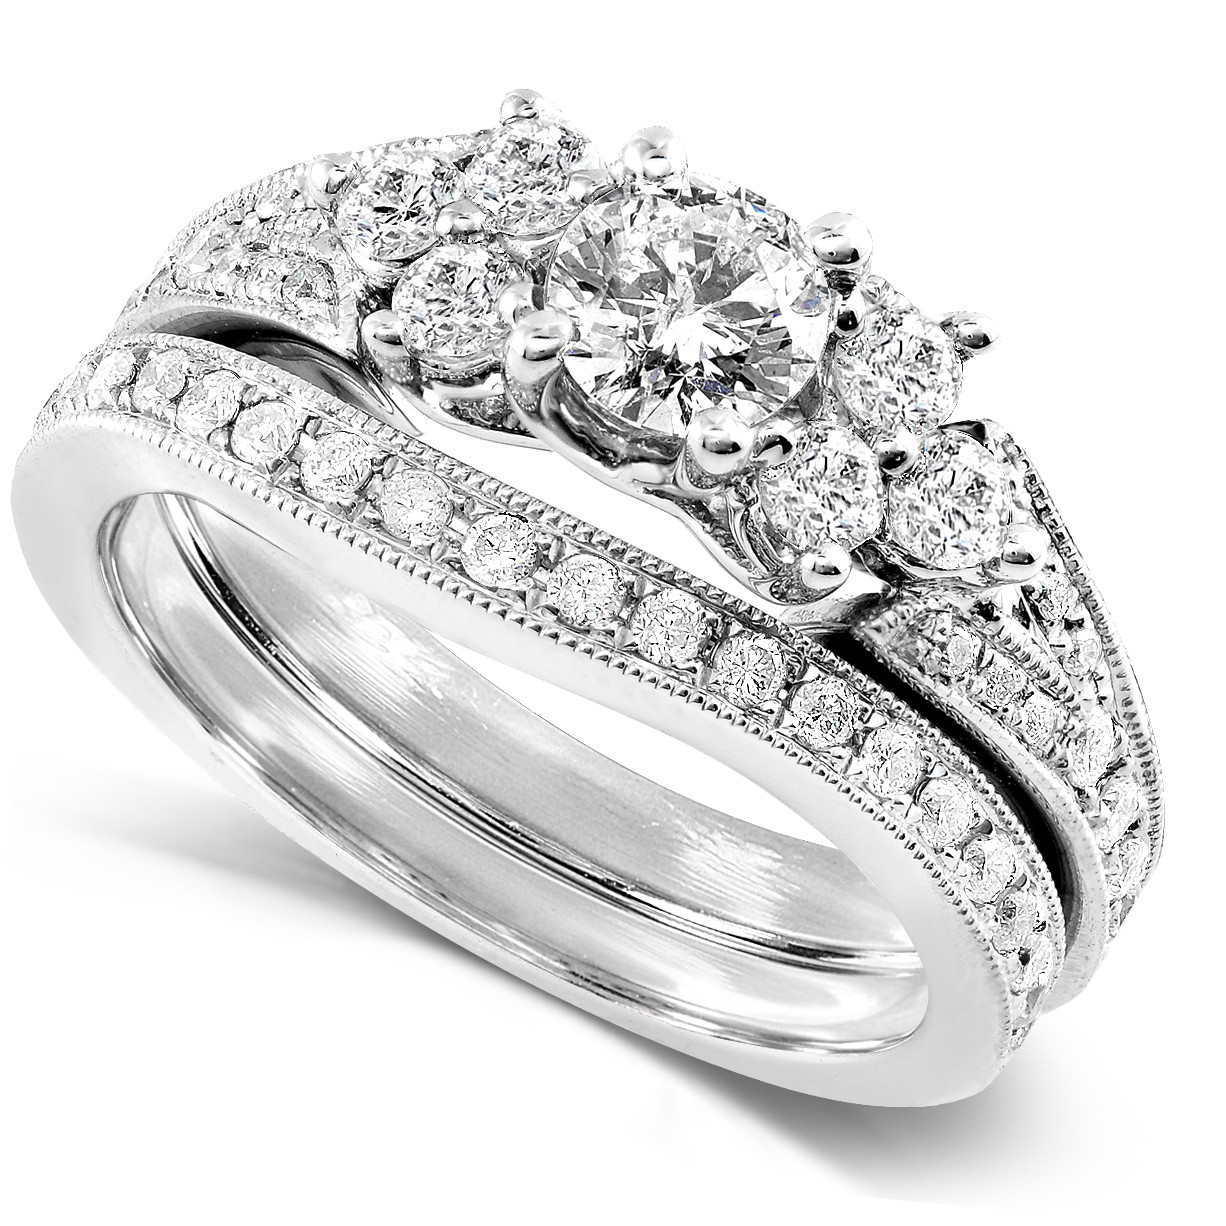 Kmart Wedding Rings
 Kmart Wedding Rings Kmart Jewelry Wedding Rings